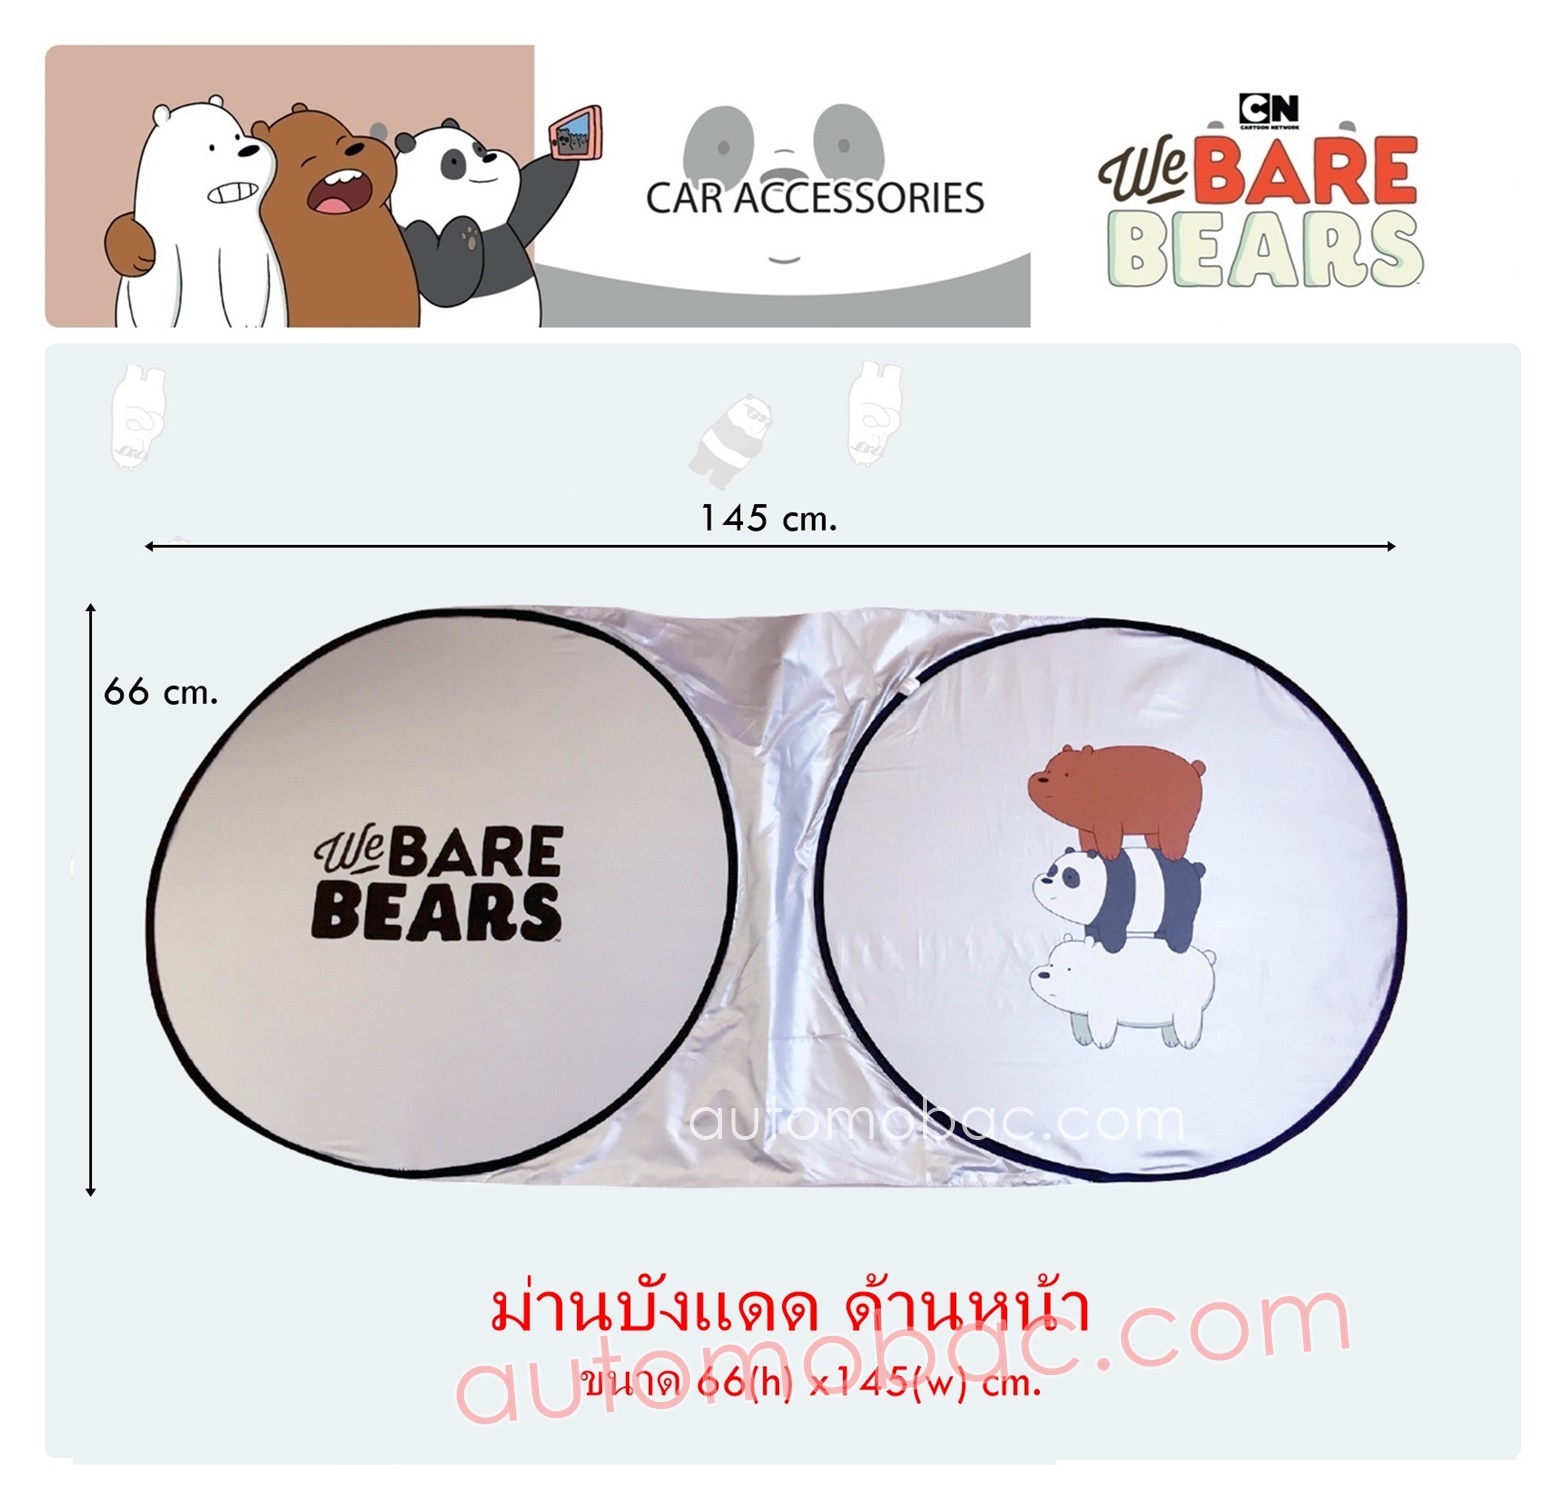 We Bare Bears ม่านบังแดด ด้านหน้า ป้องกัน UV และความร้อน 66x145 cm. ลิขสิทธิ์แท้ ใช้ได้กับรถทุกรุ่น